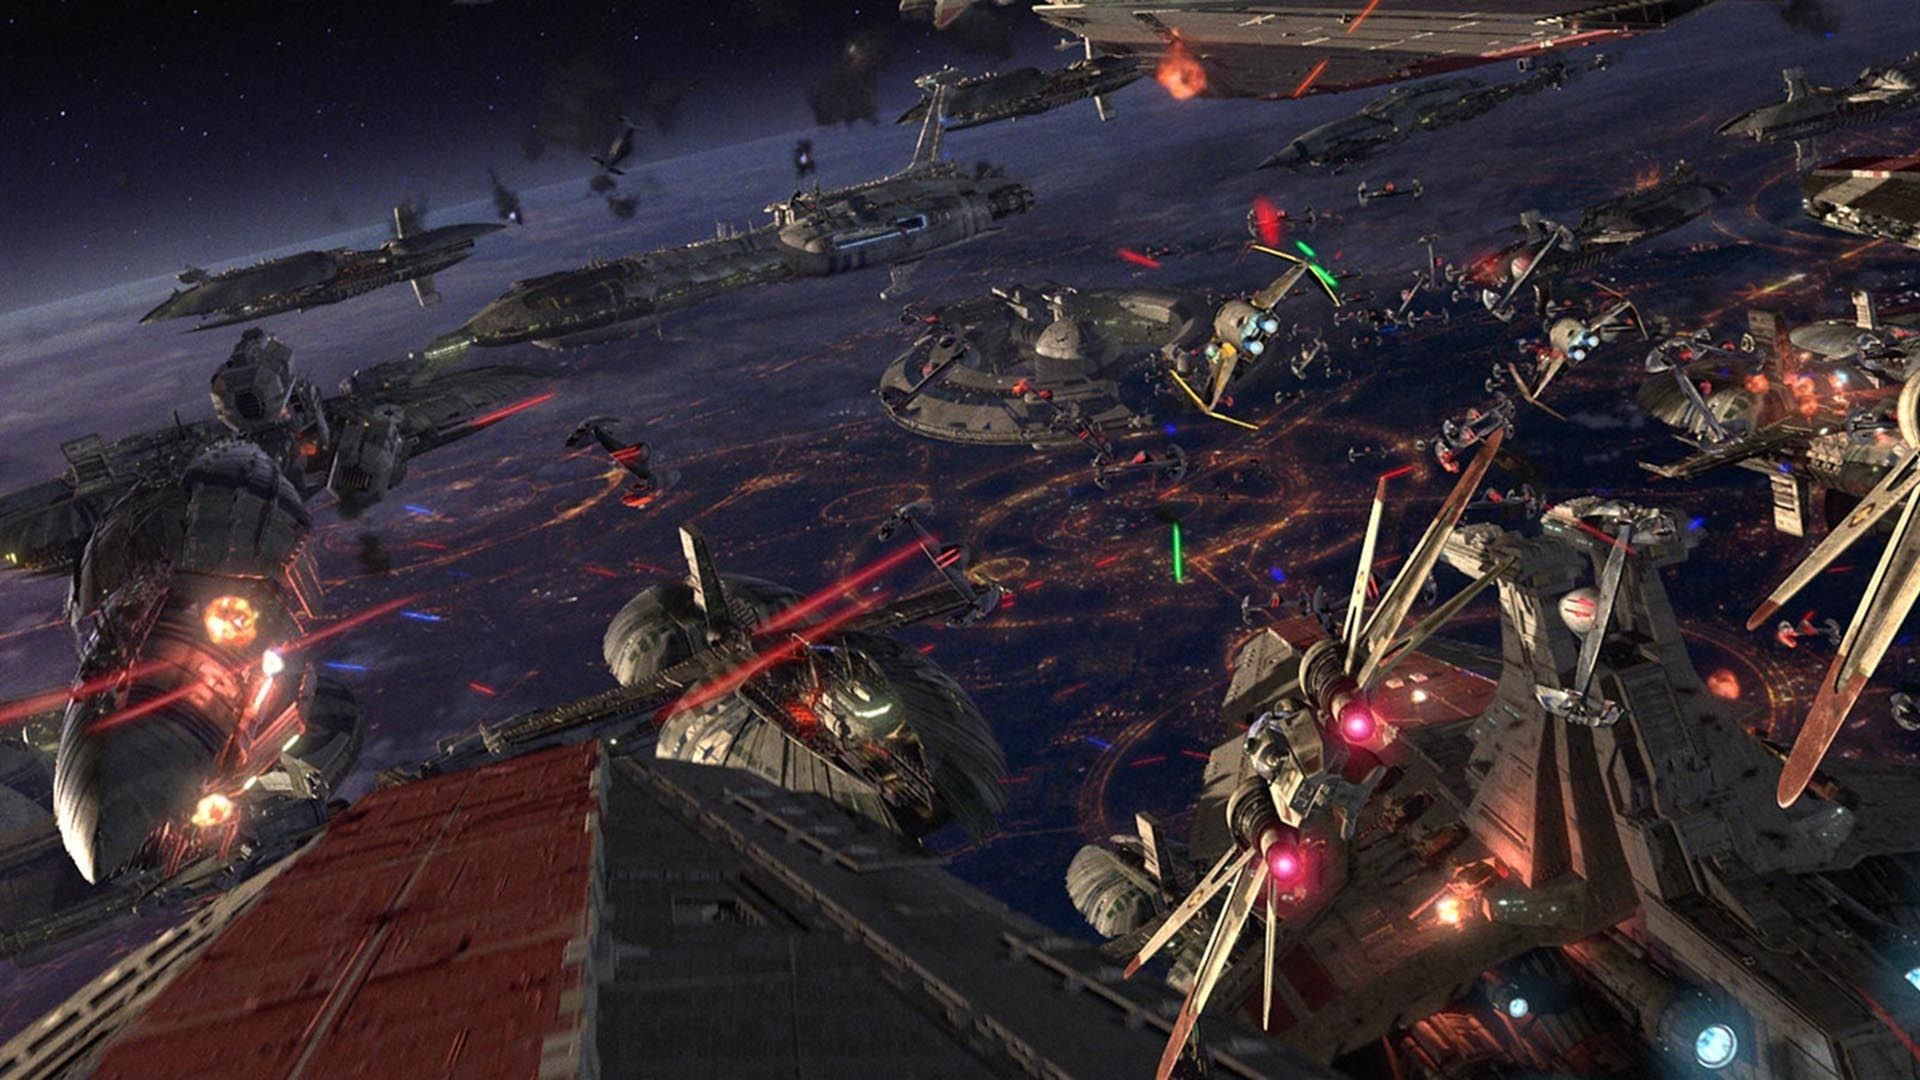 Star Wars Episode III Revenge of the Sith sci-fi battle spaceship ...